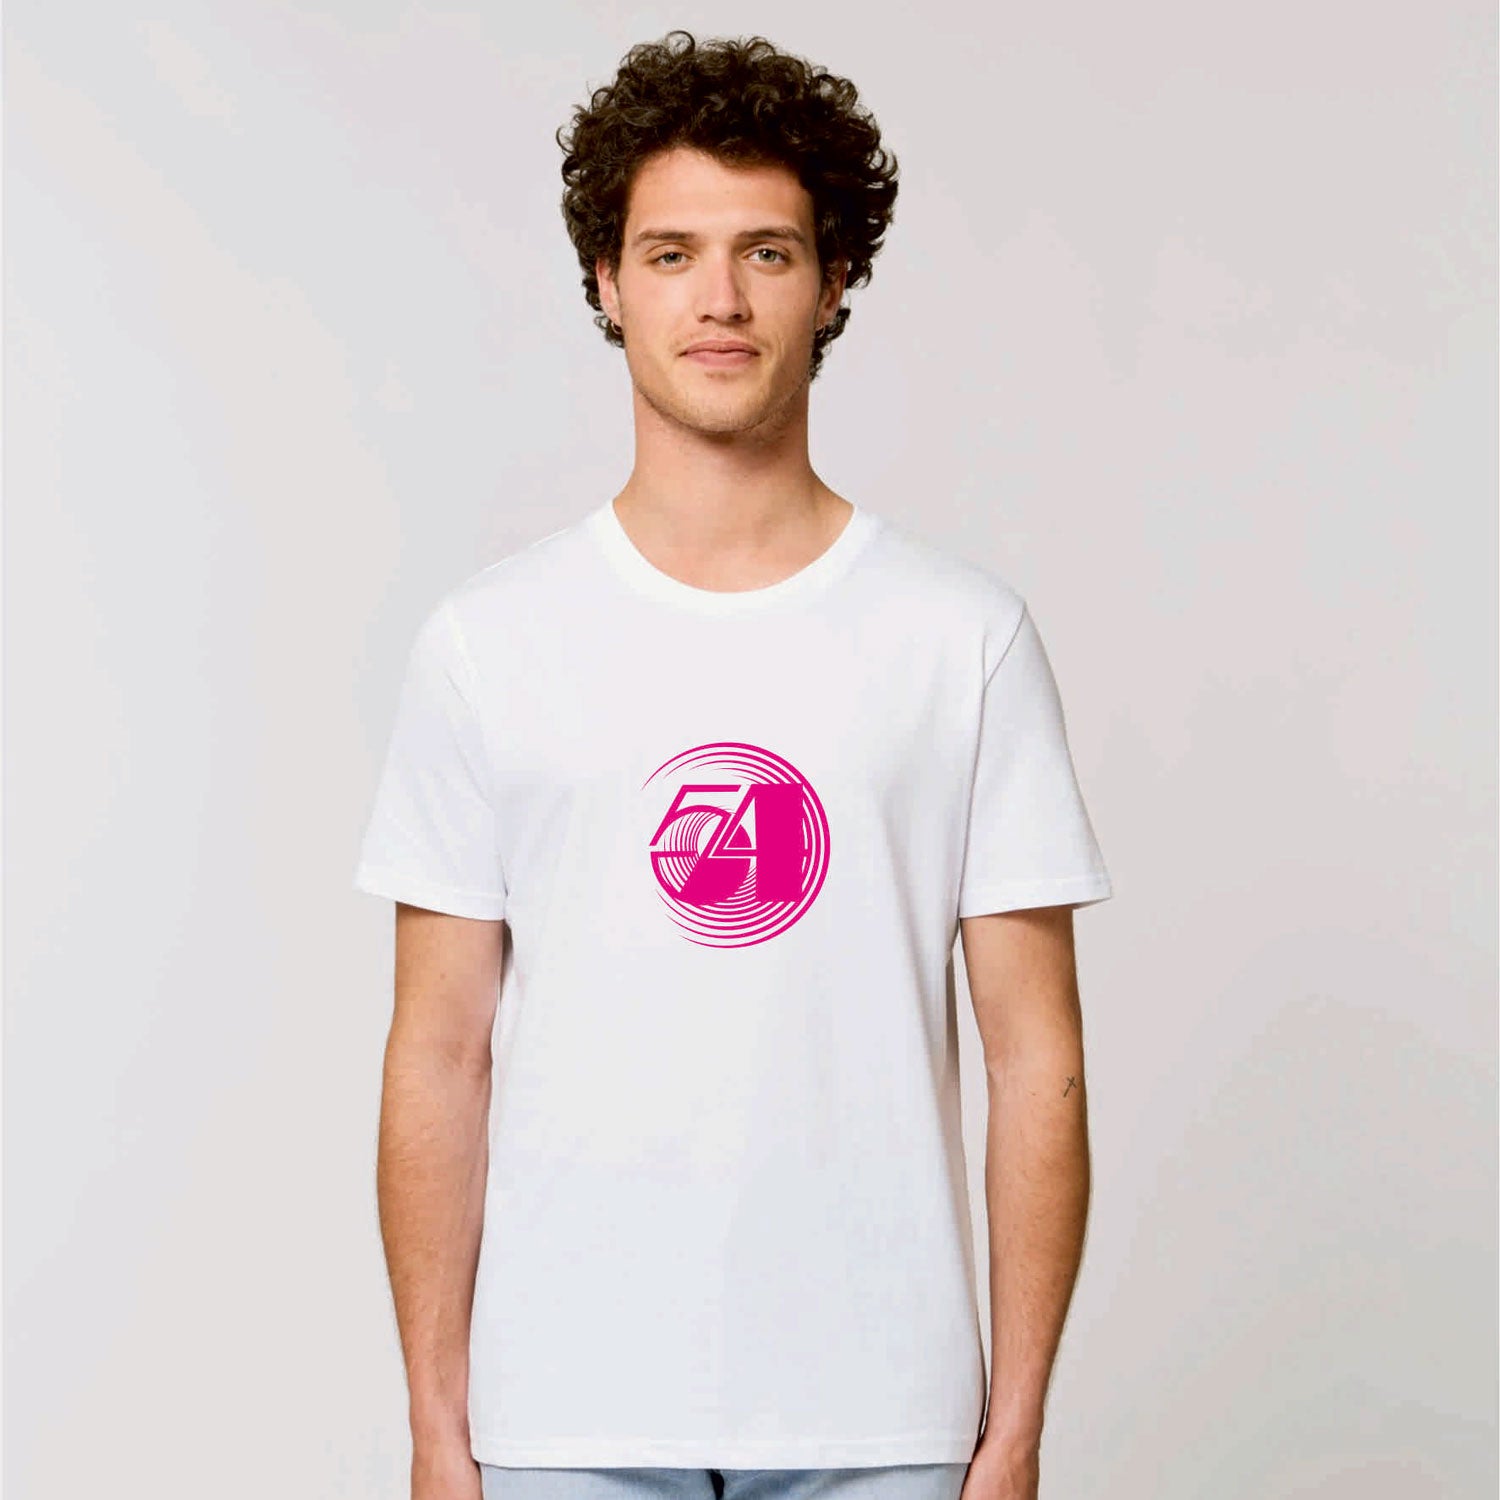 "54" Internationale Hofer Filmtage, ICONIC BIO T-Shirt unisex